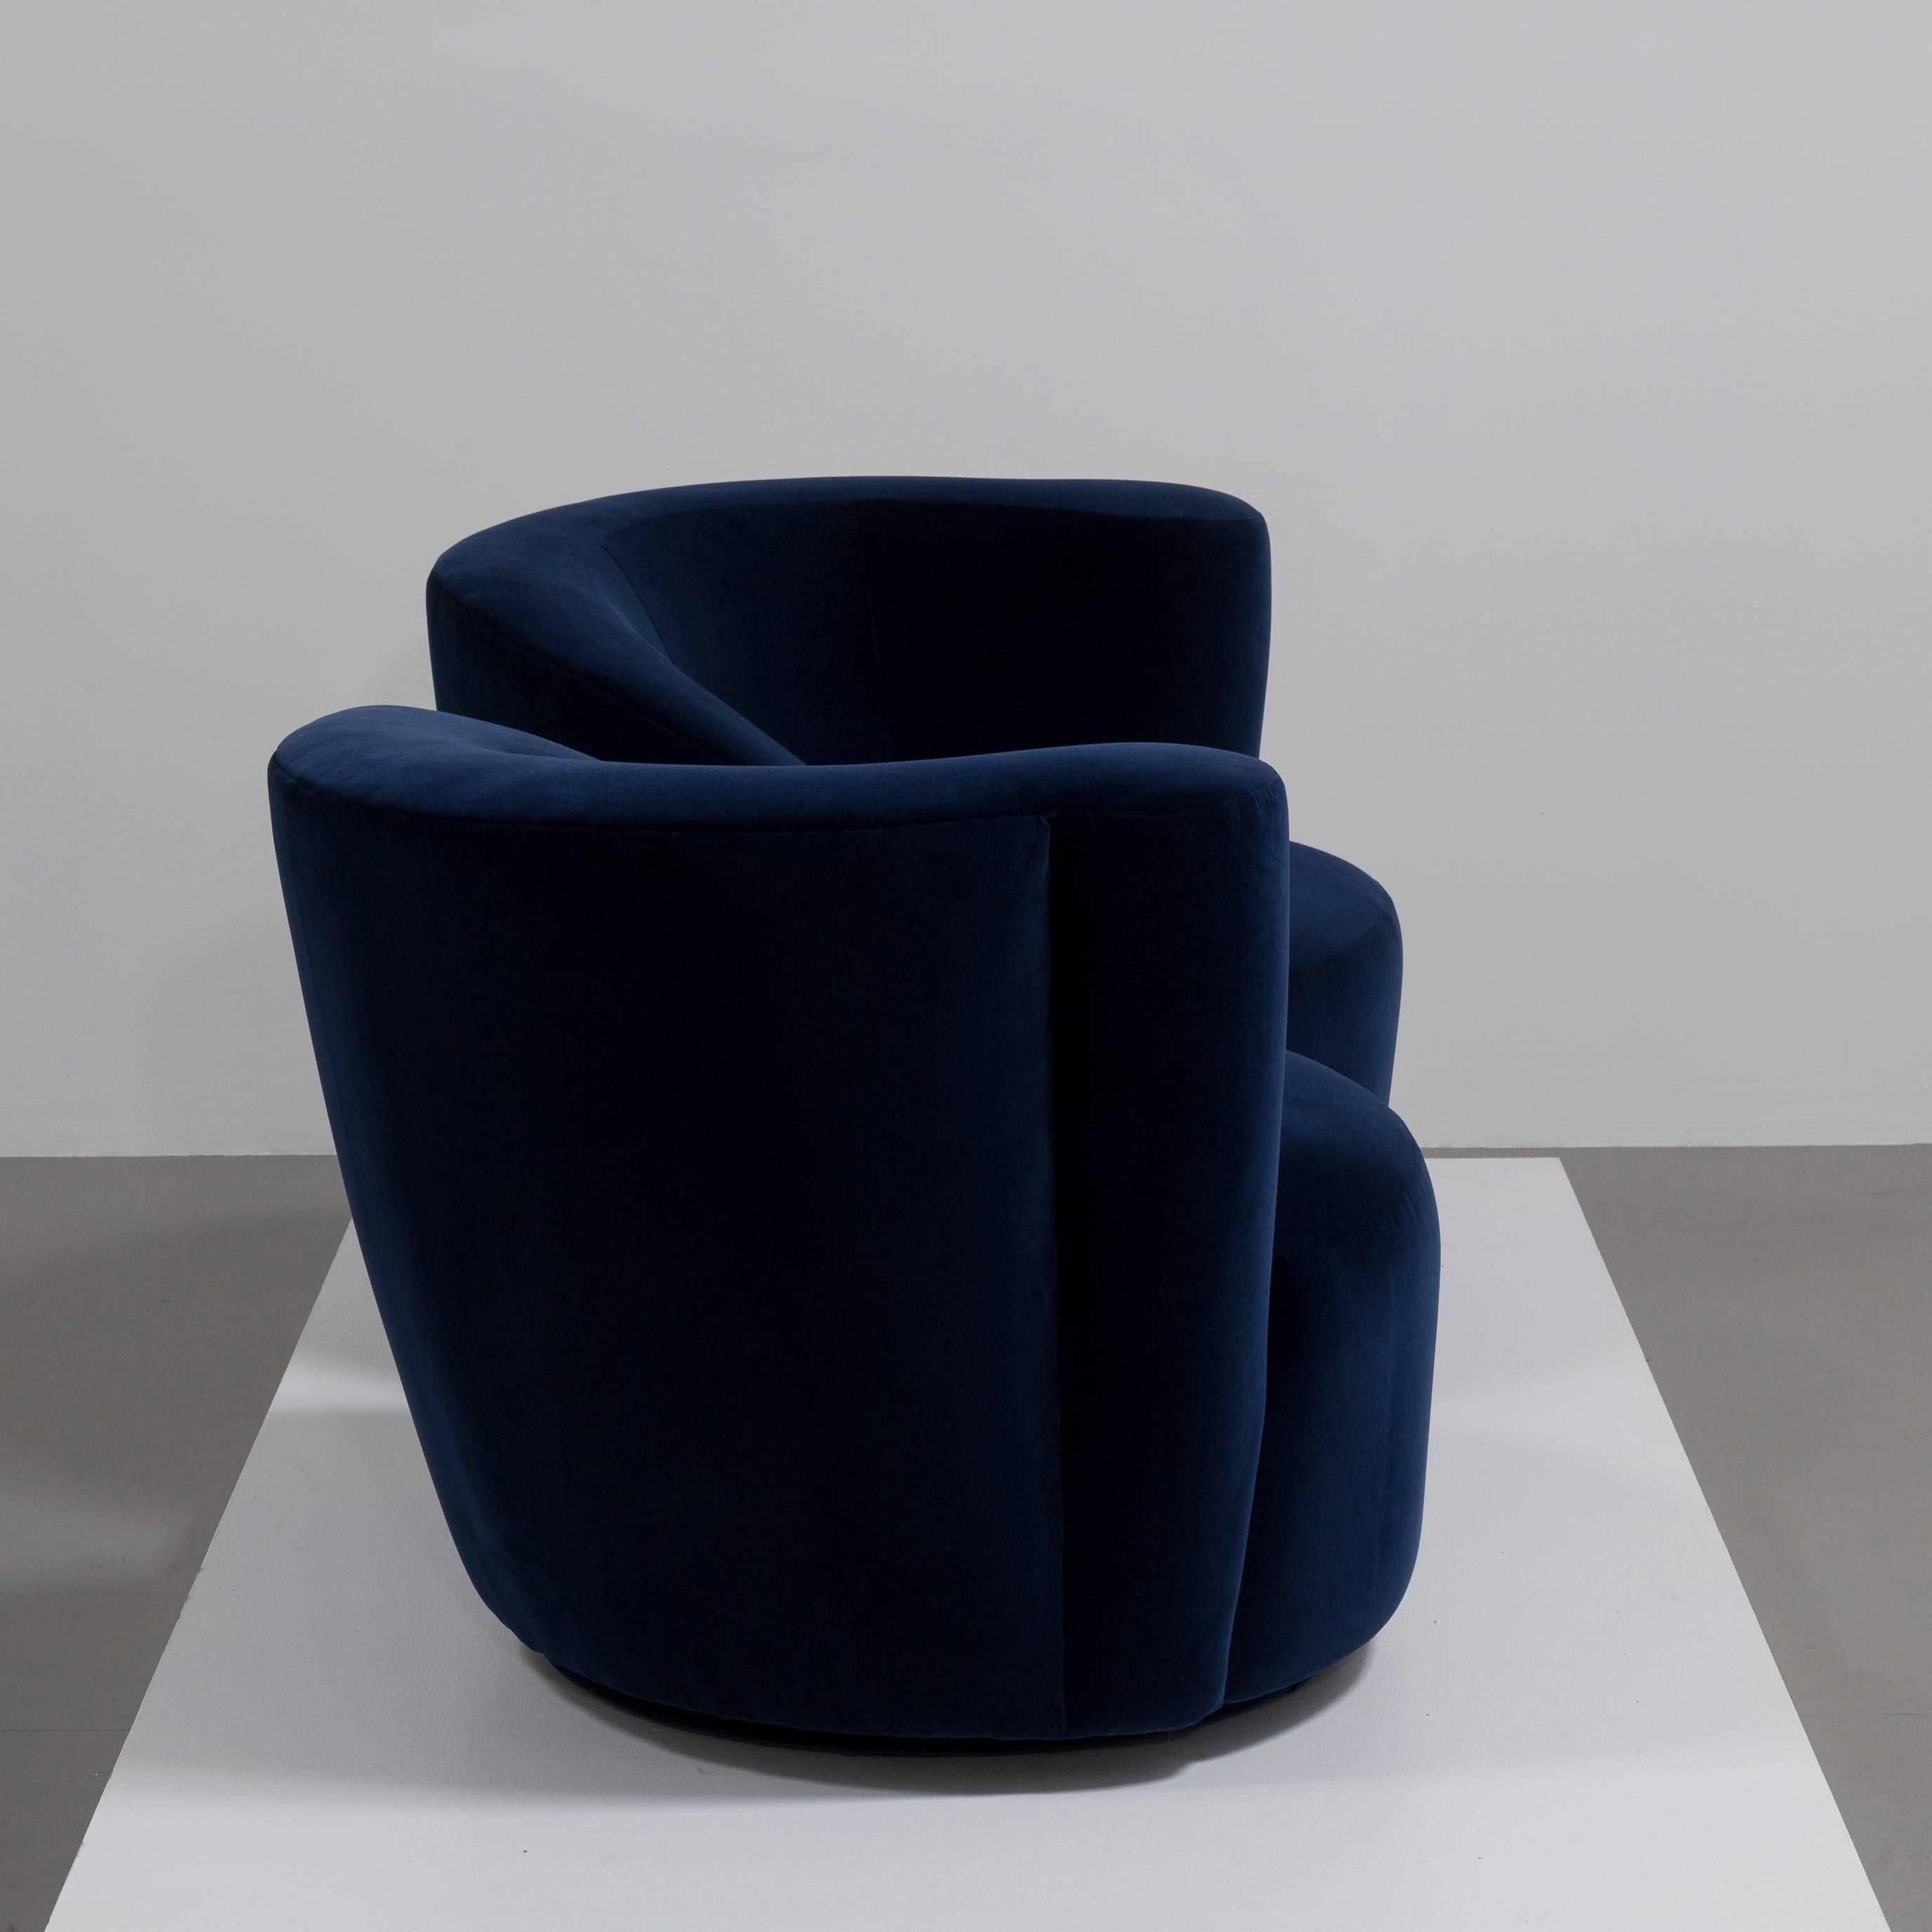 Fabric Pair of Vladimir Kagan Designed Nautilus Swivel Chairs, 1990s